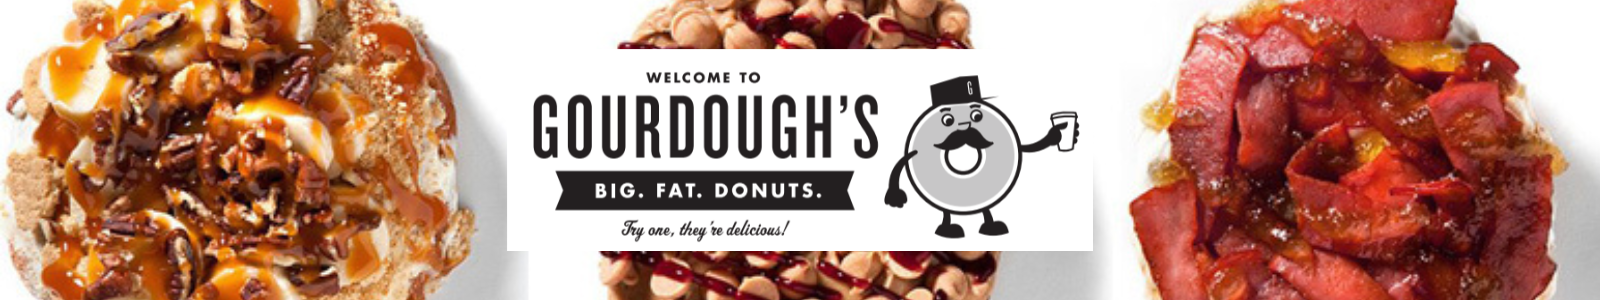 Gourdough's Big Fat Donuts